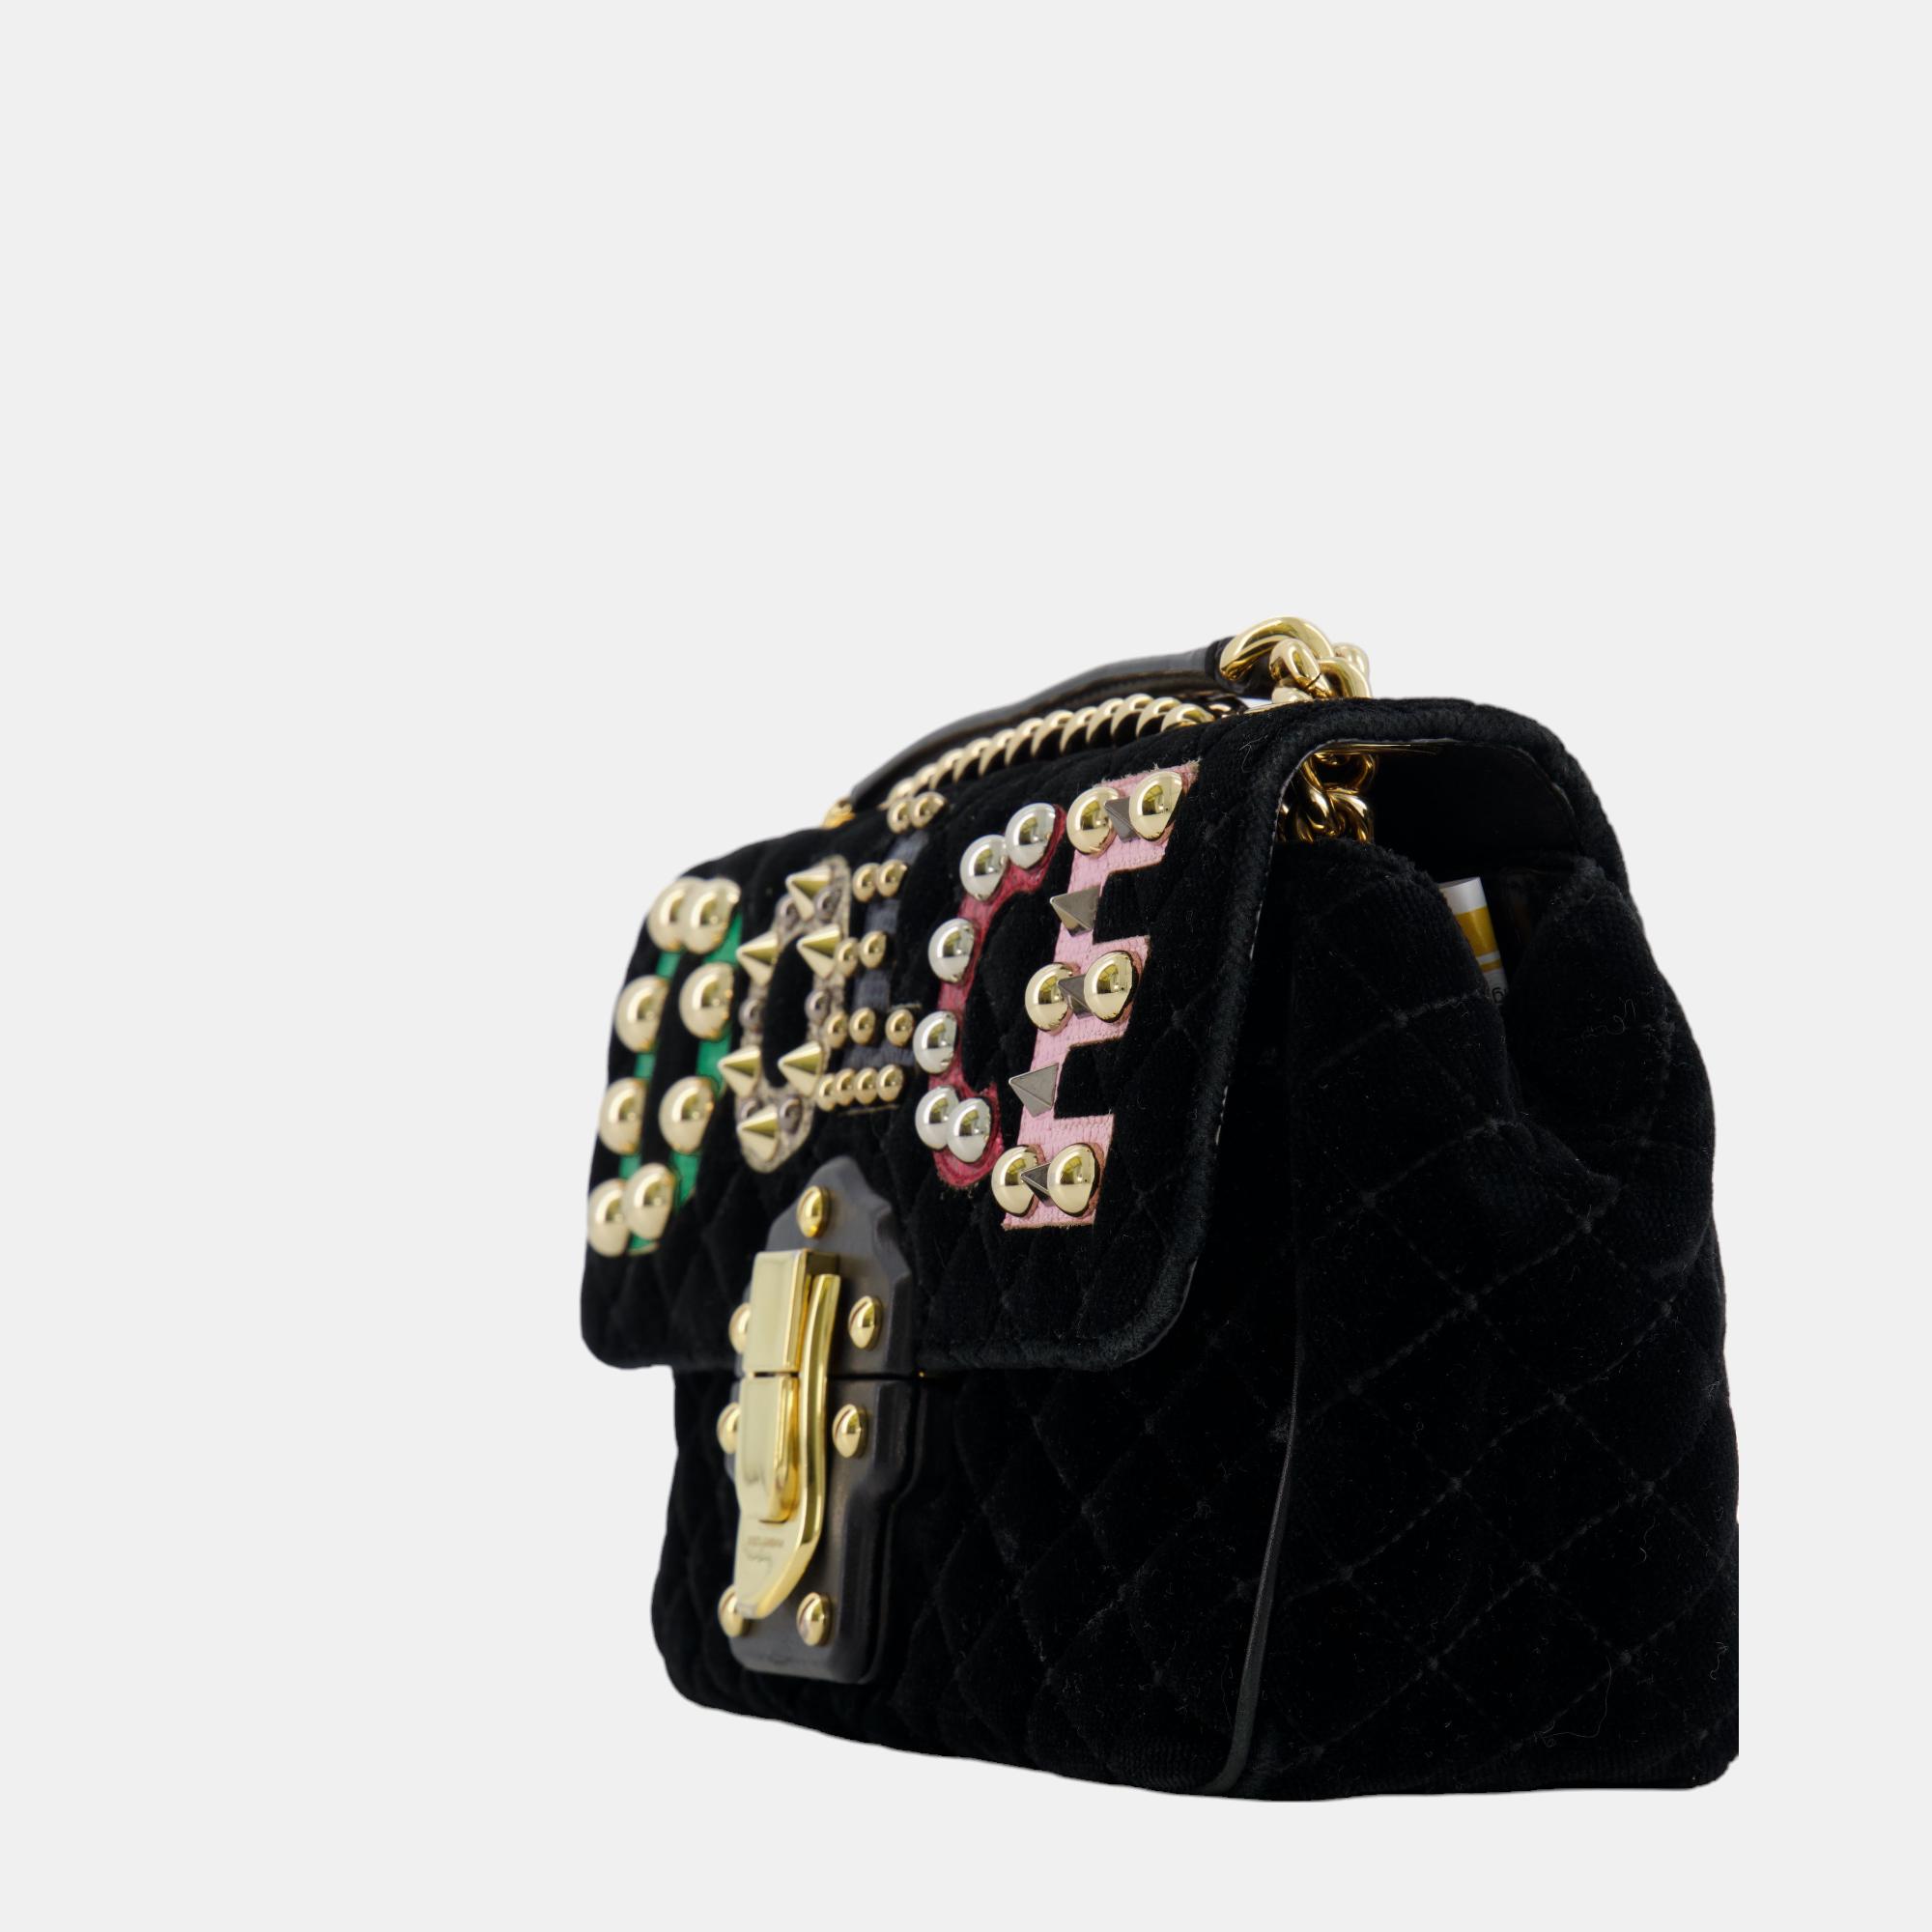 Dolce & Gabbana Black Velvet Lucia Bag With Embellishments And Gold Hardware